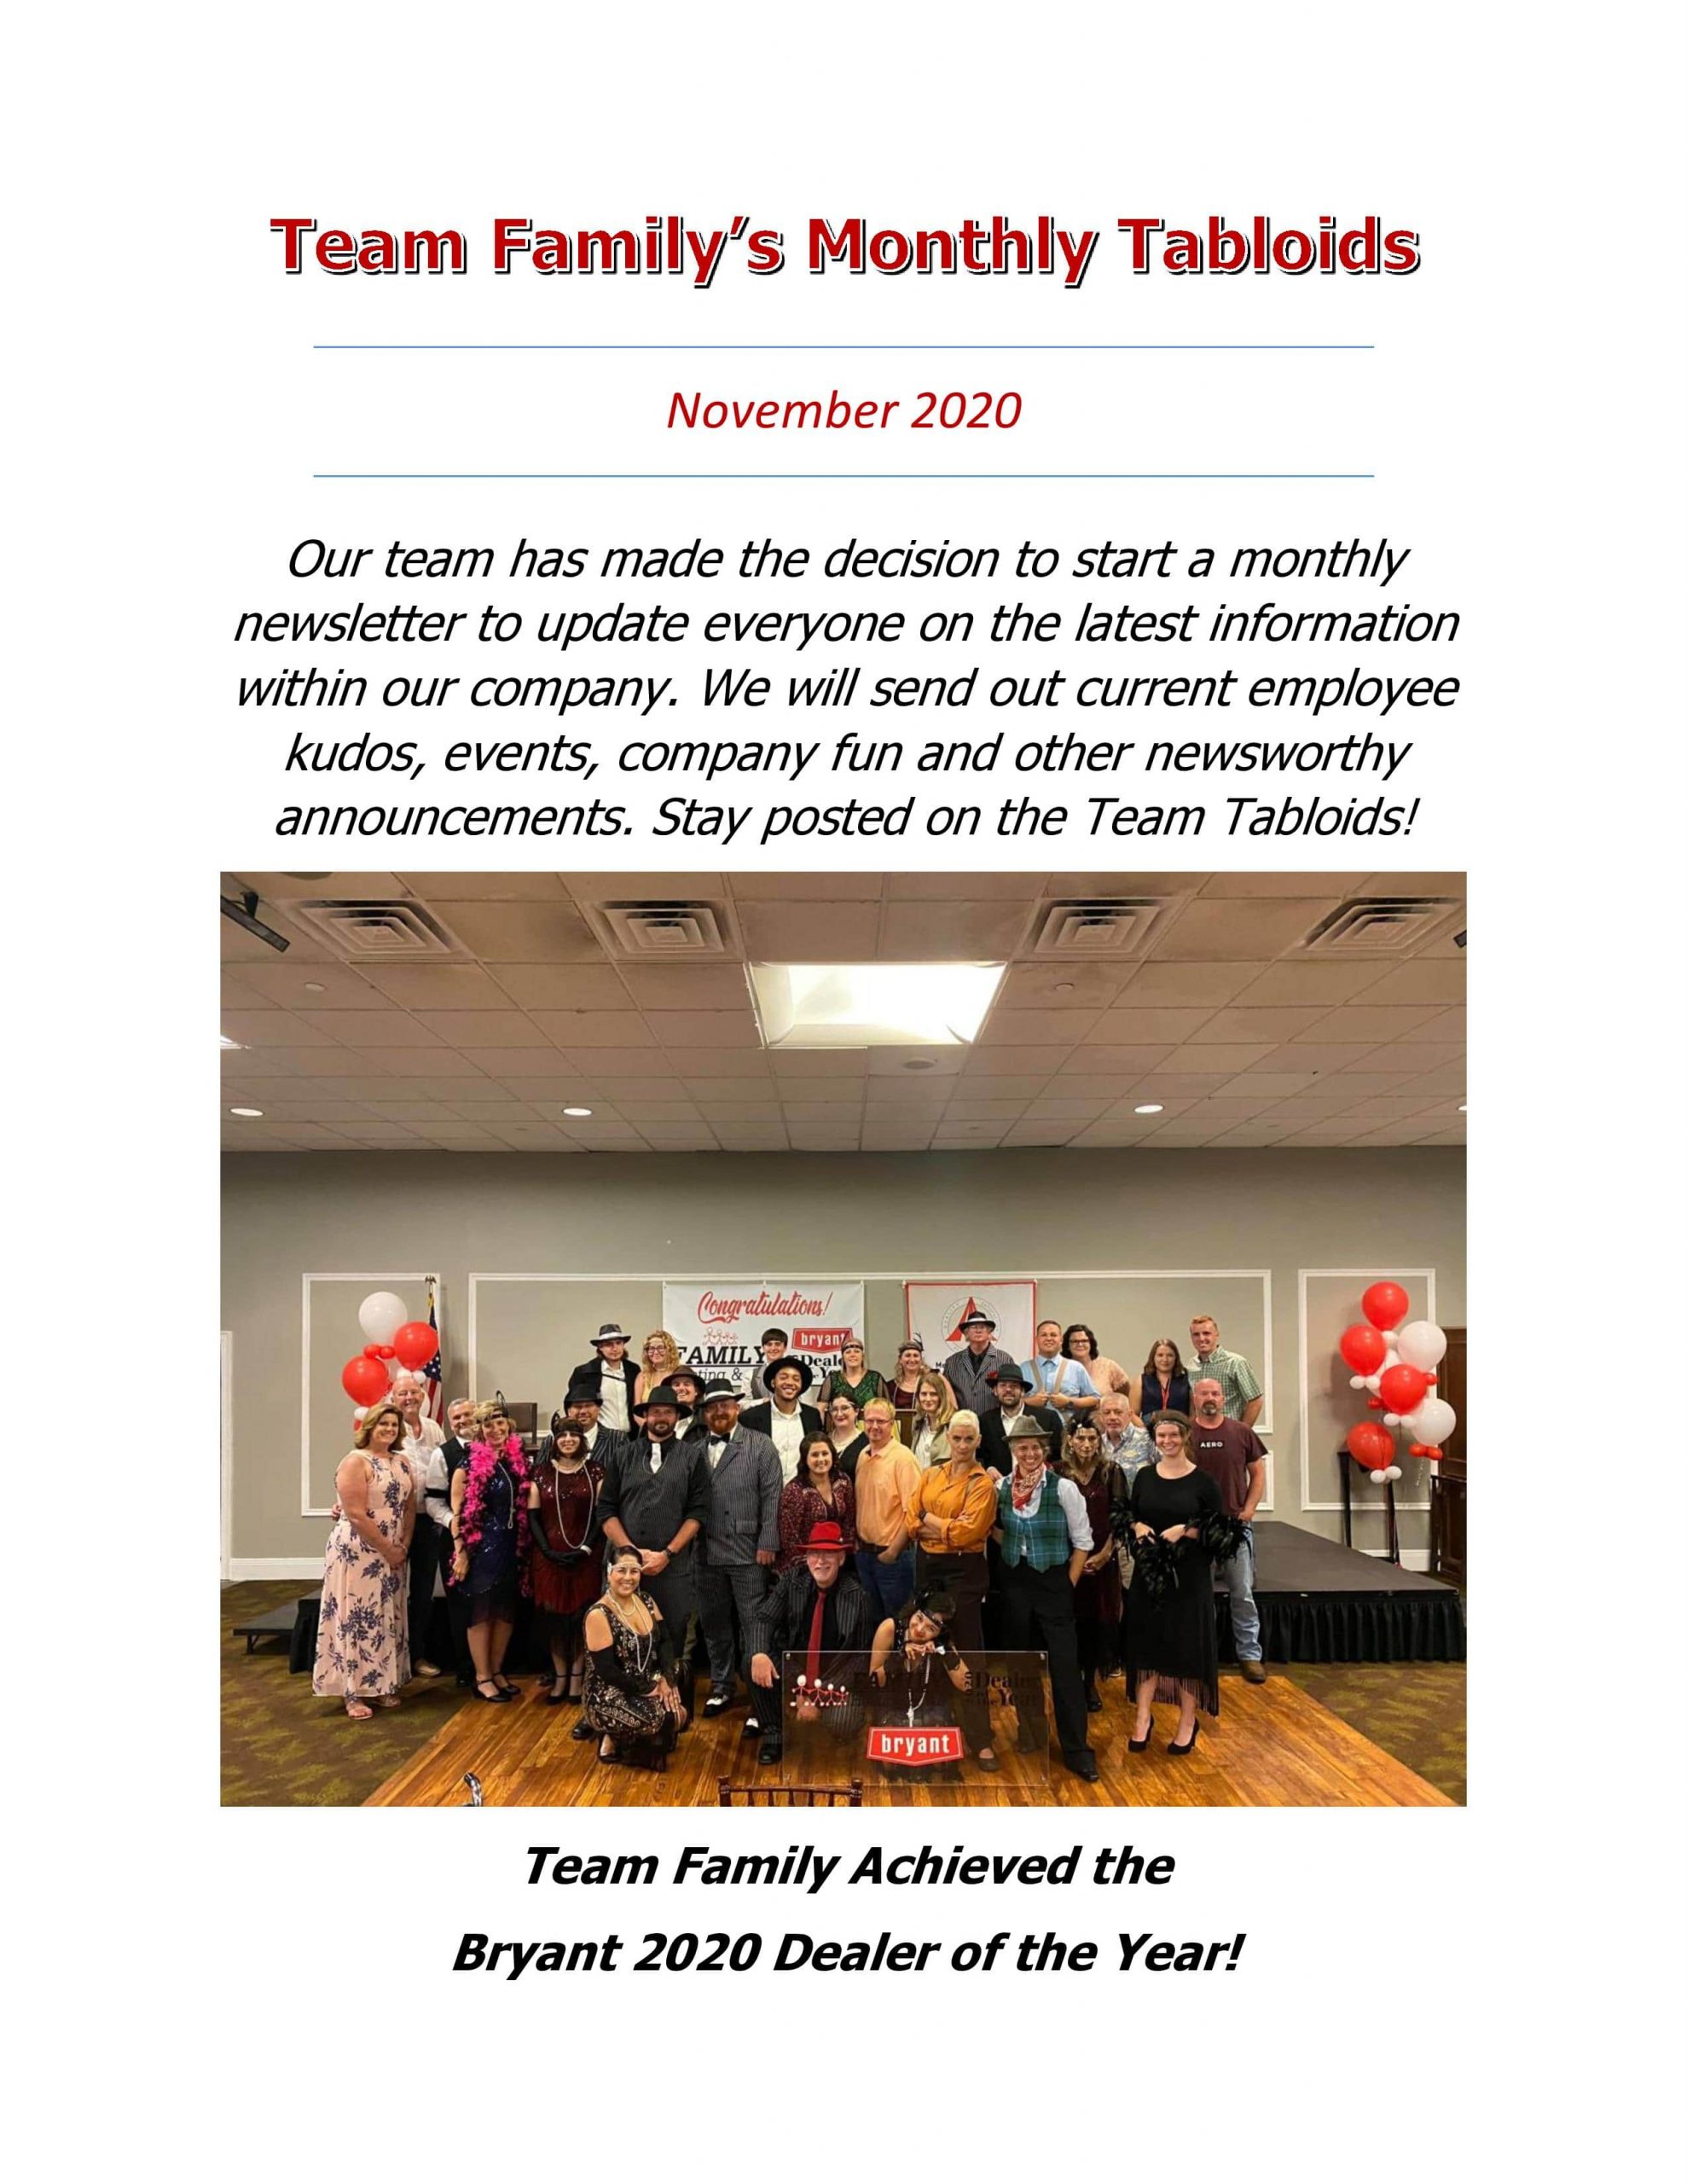 Team Family Monthly Tabloids - November 2020